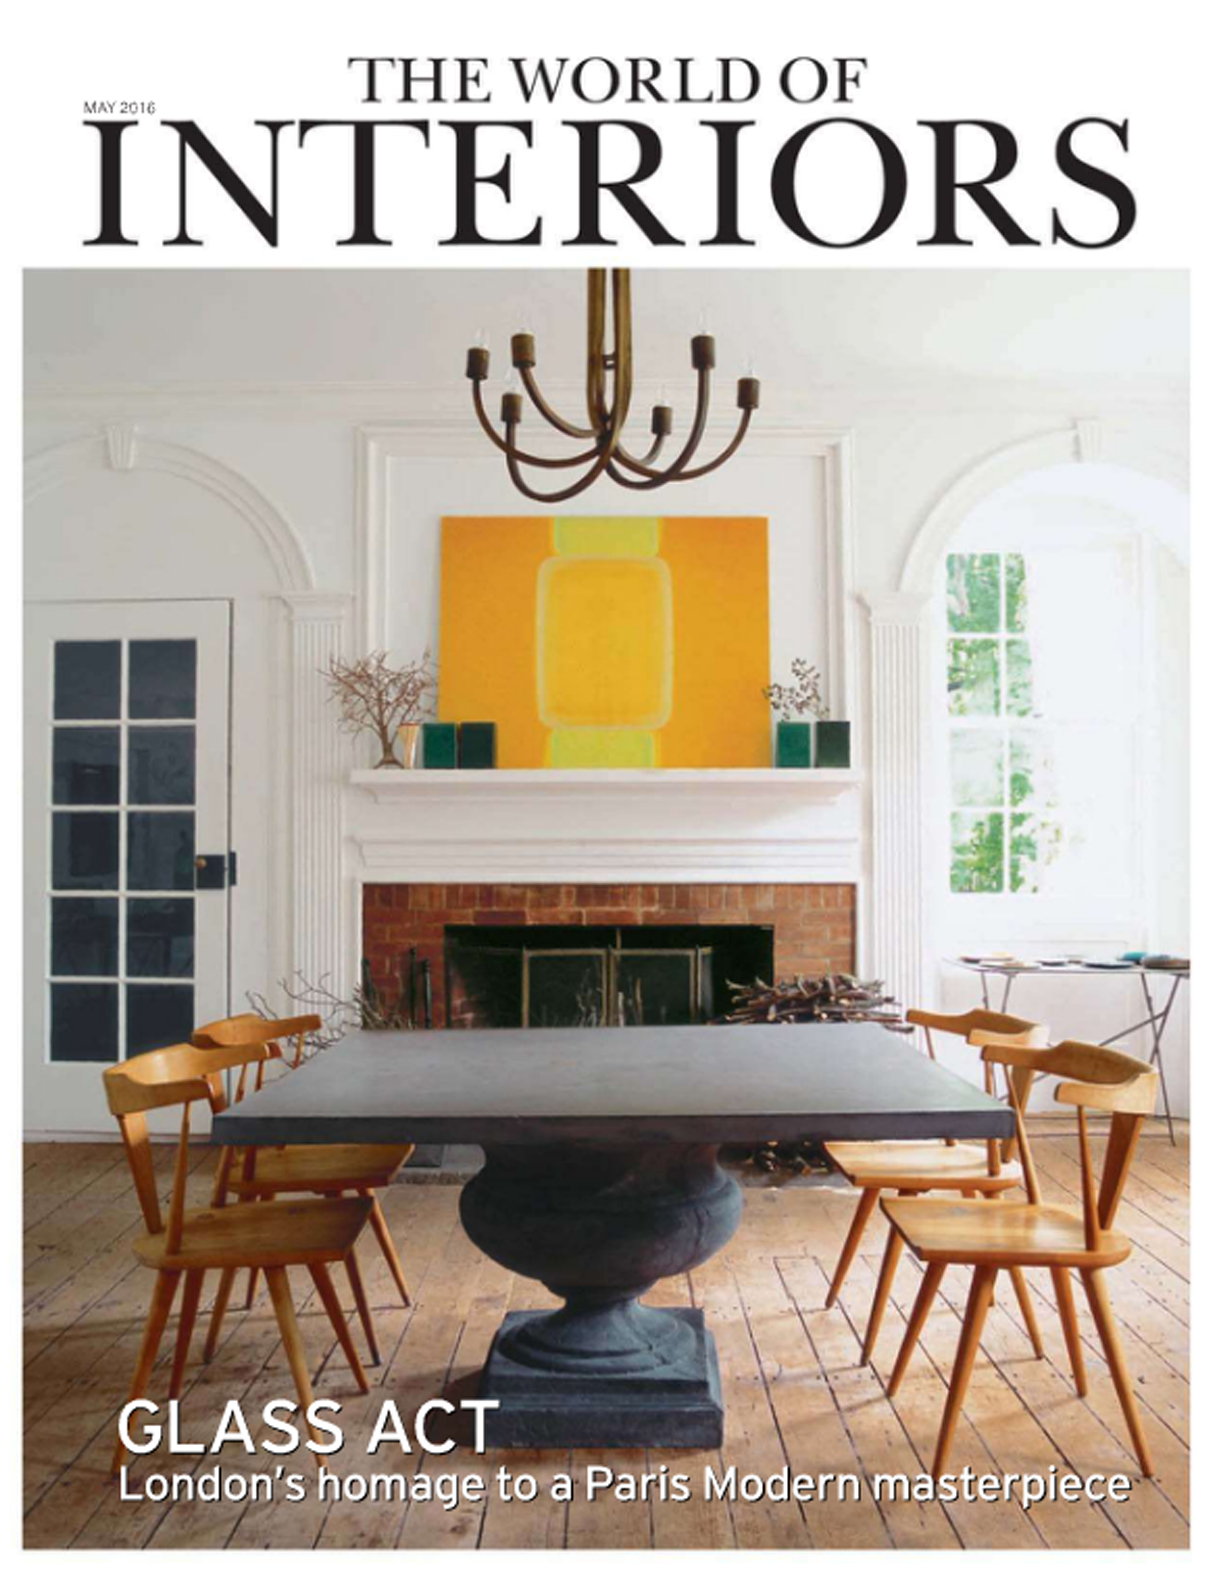 World of interiors magazine Kingham bespoke kitchen design feature May 2016